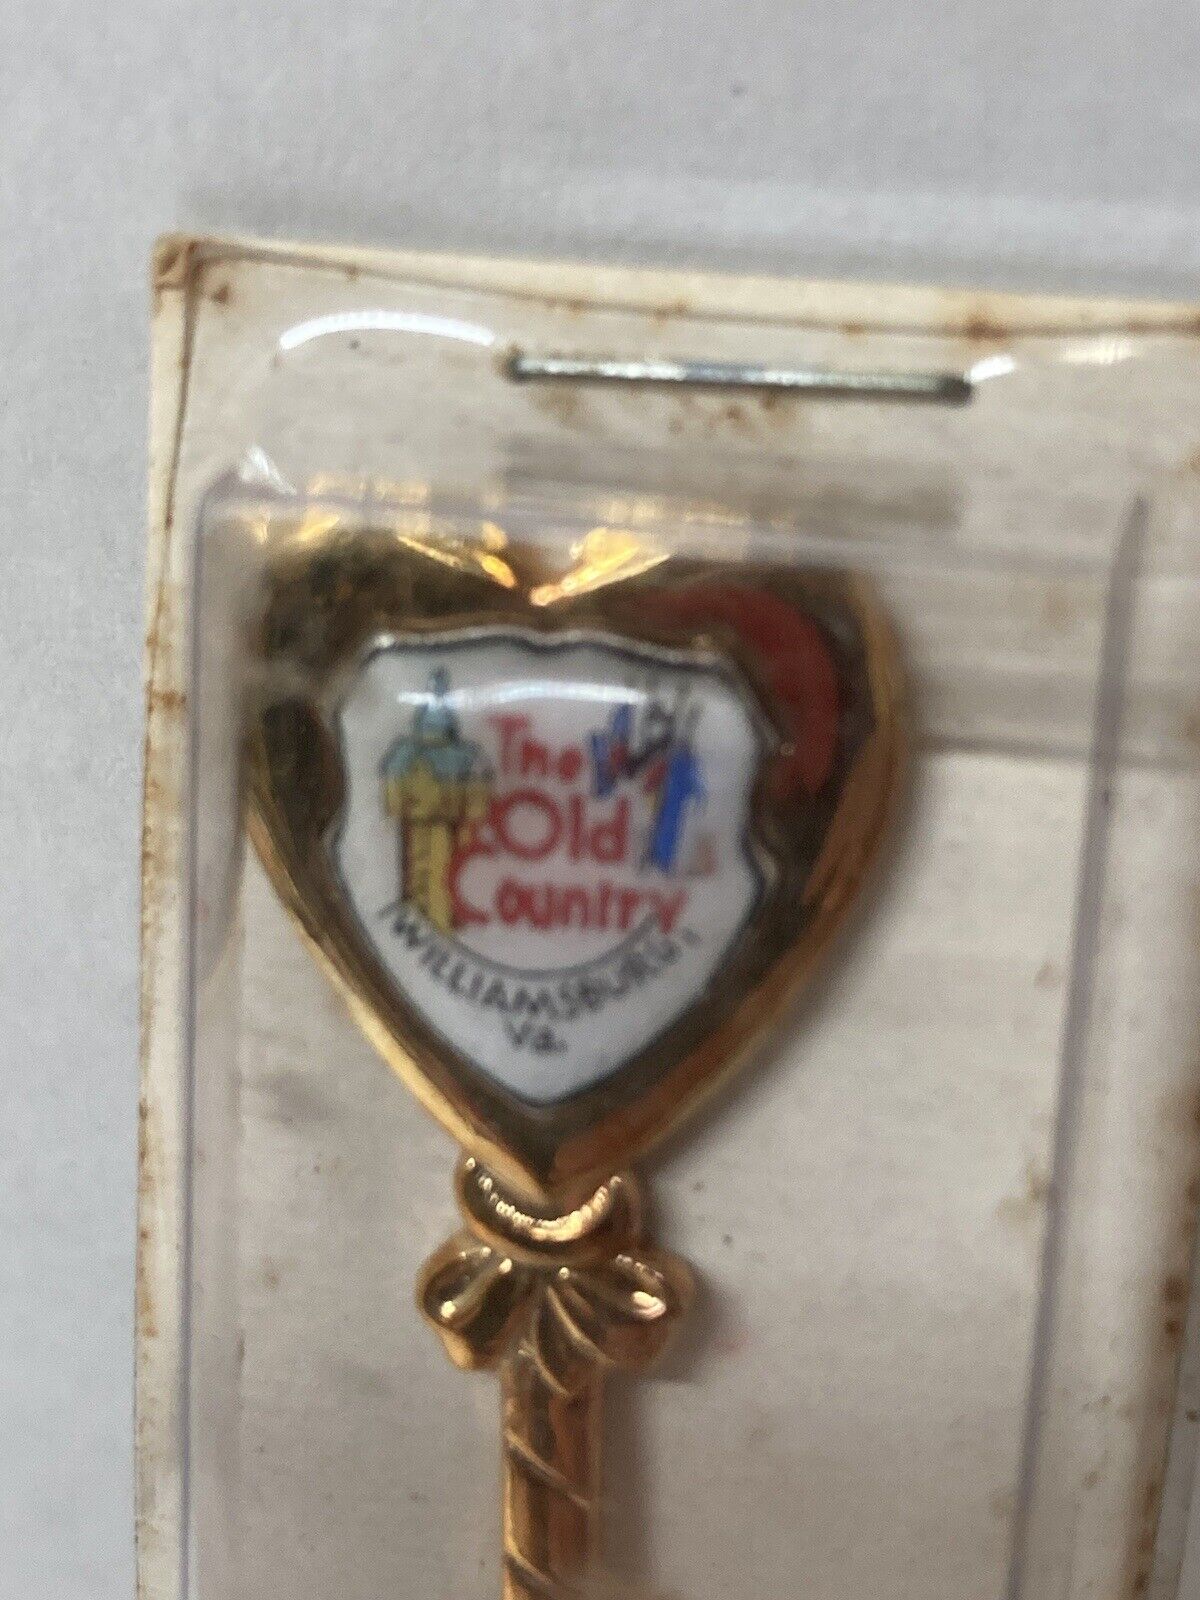 Vintage Collector Souvenir Spoon "The Old Country" Williamsburg, VA gold tone Без бренда - фотография #2